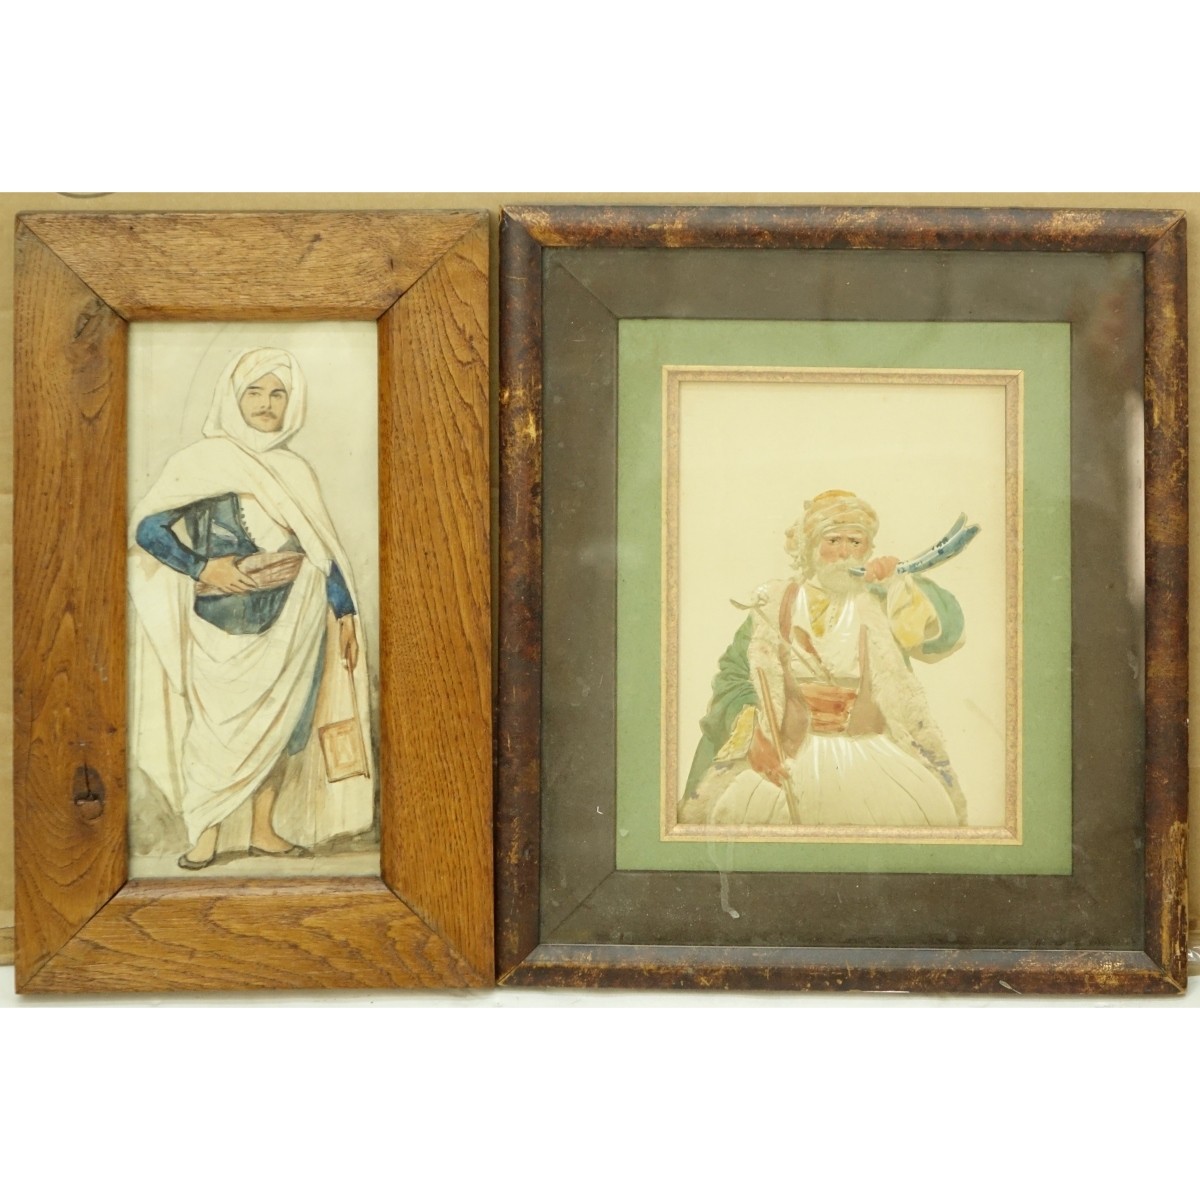 Two (2) Orientalist Watercolors "Portraits"